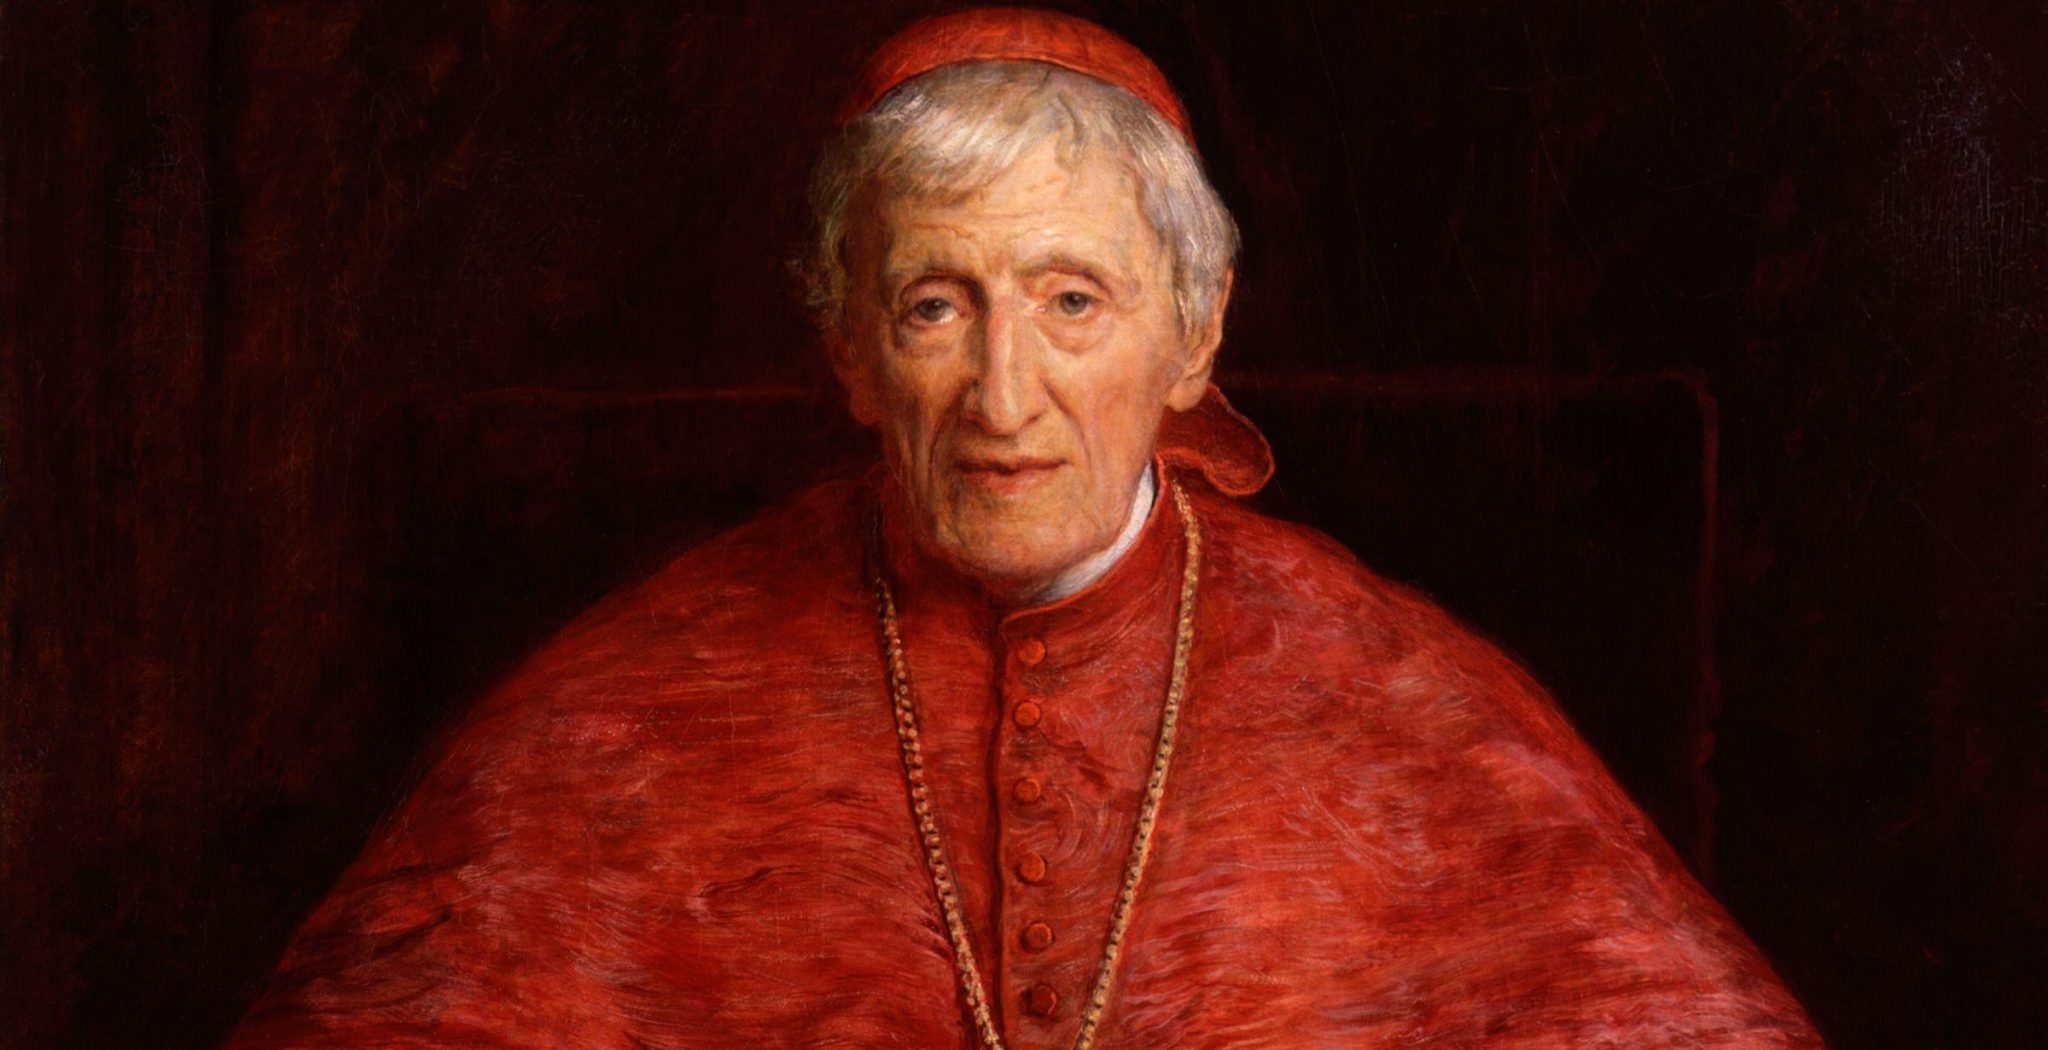 Cardenal John Henry Newman